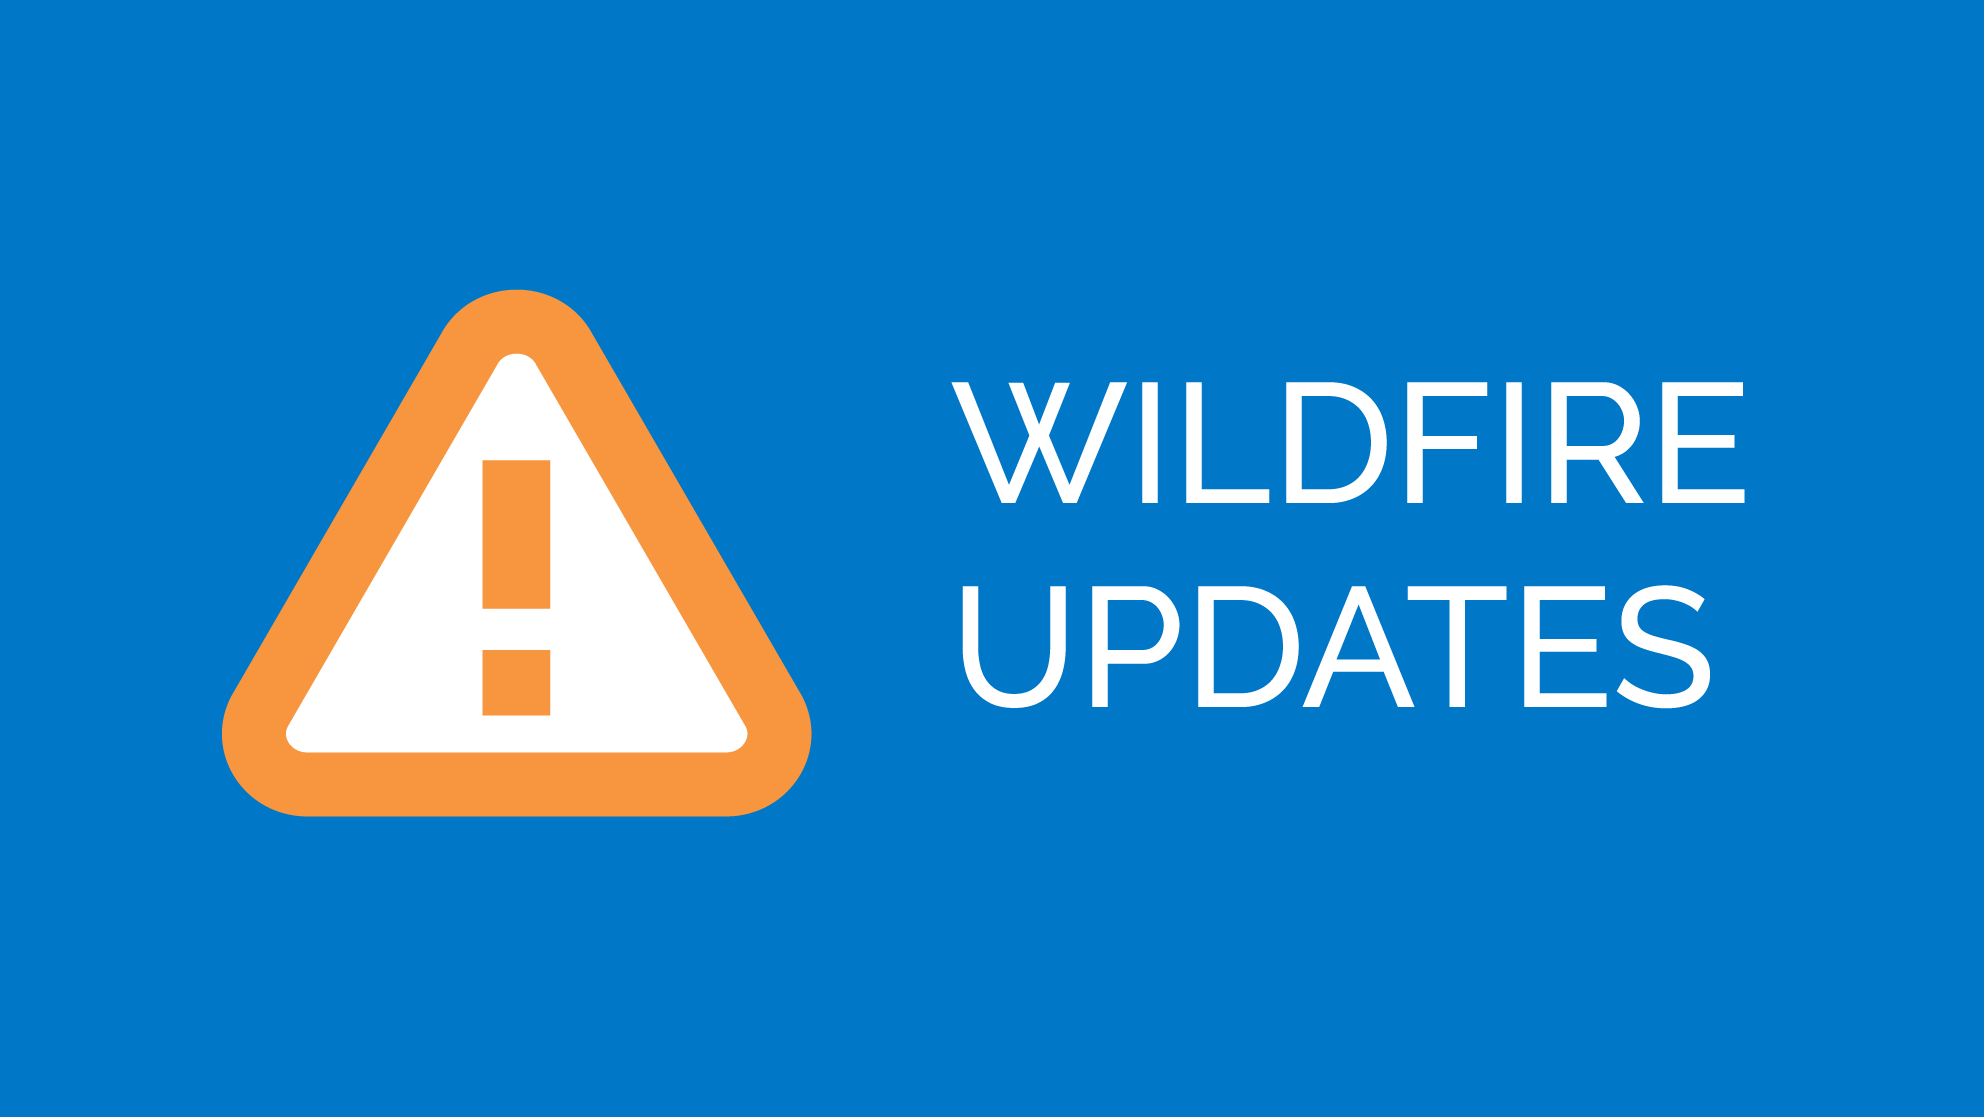 Wildfire Updates graphic